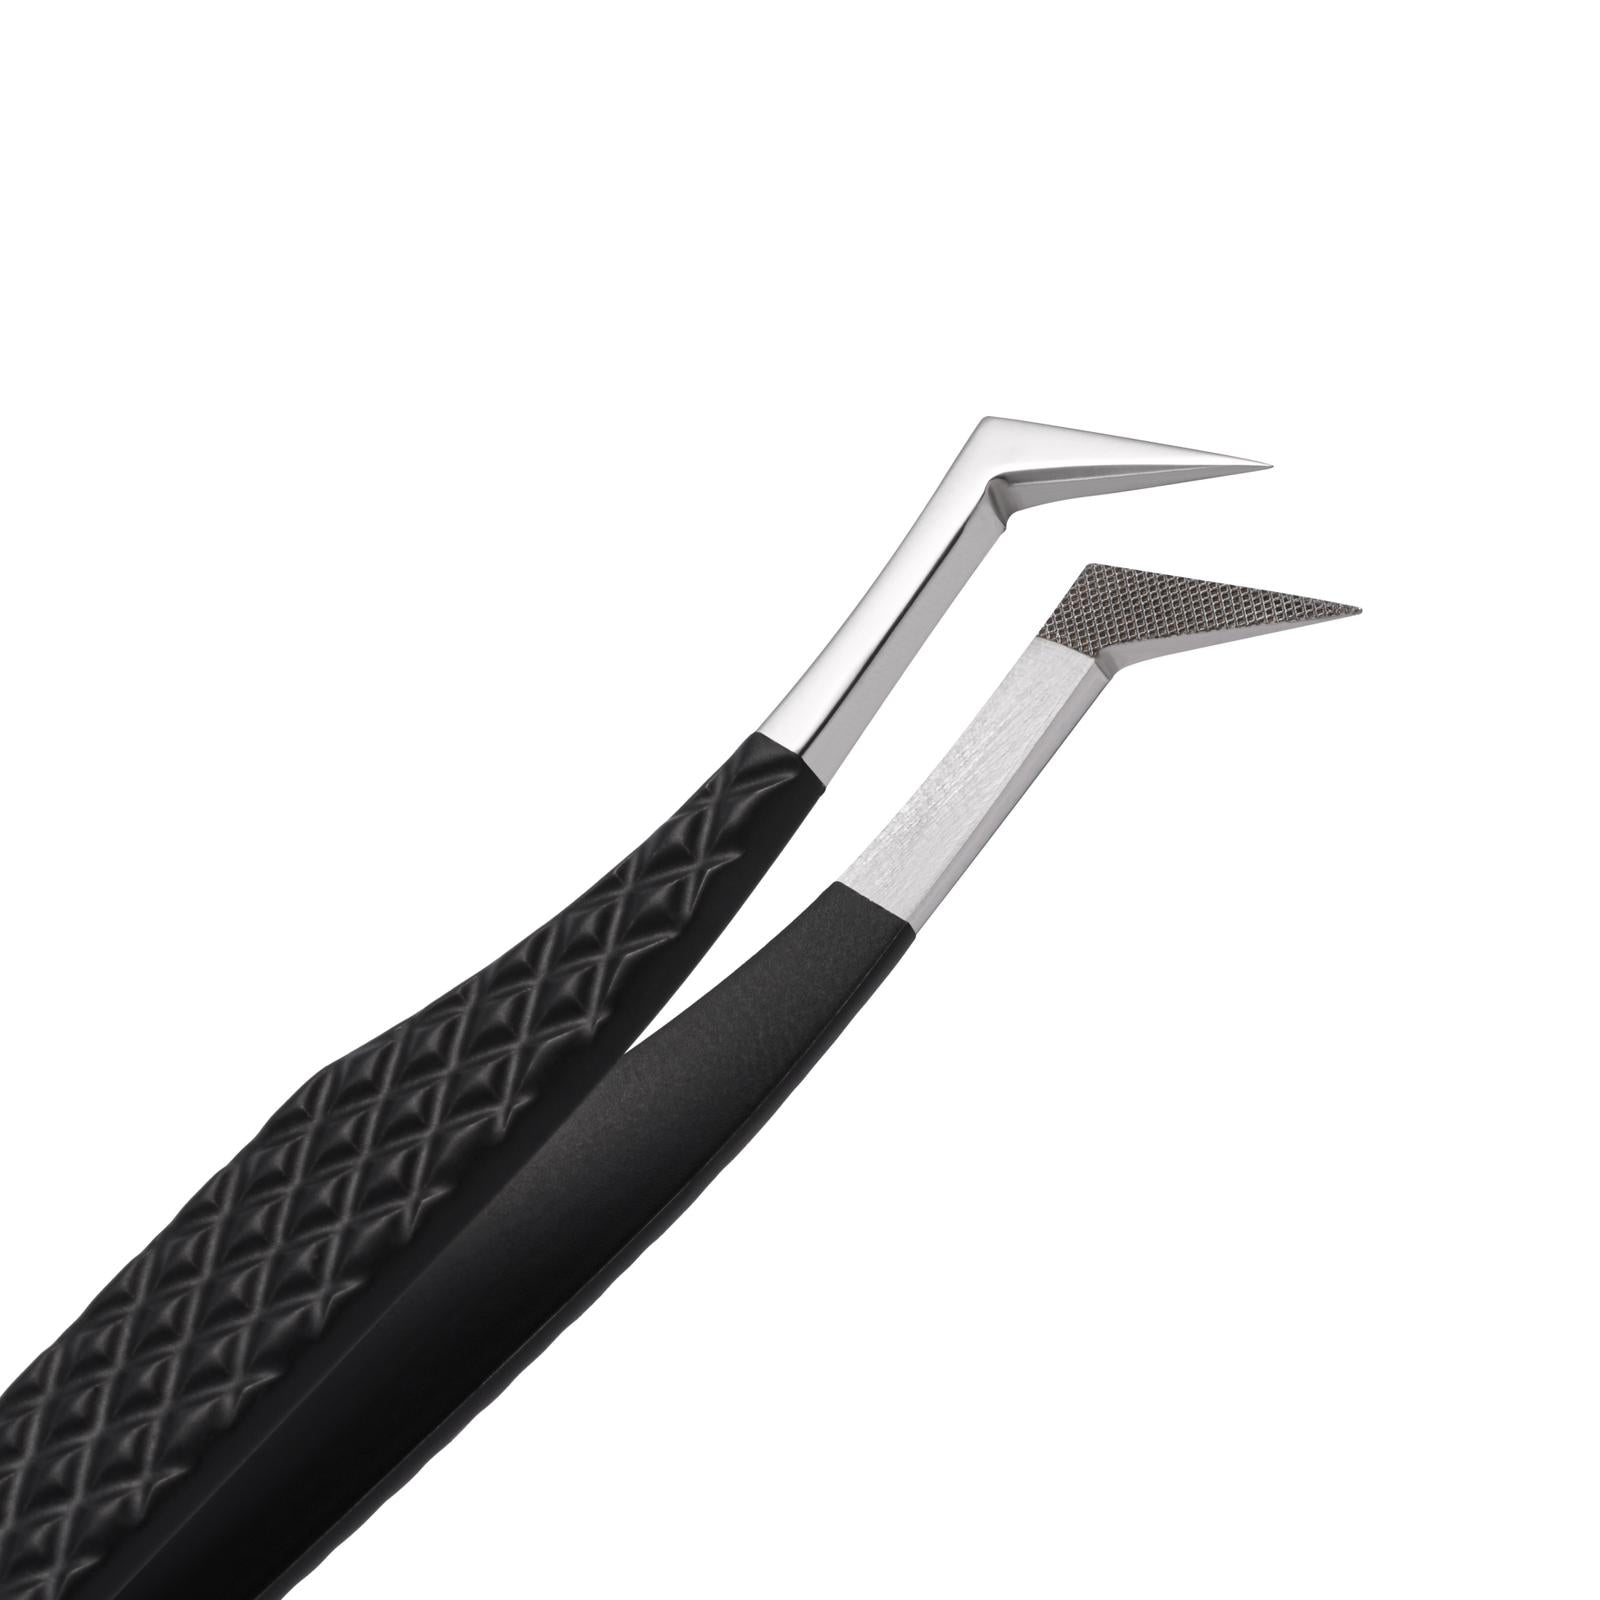 Fiber tip 45 degree boot diamond grip tweezer close-up